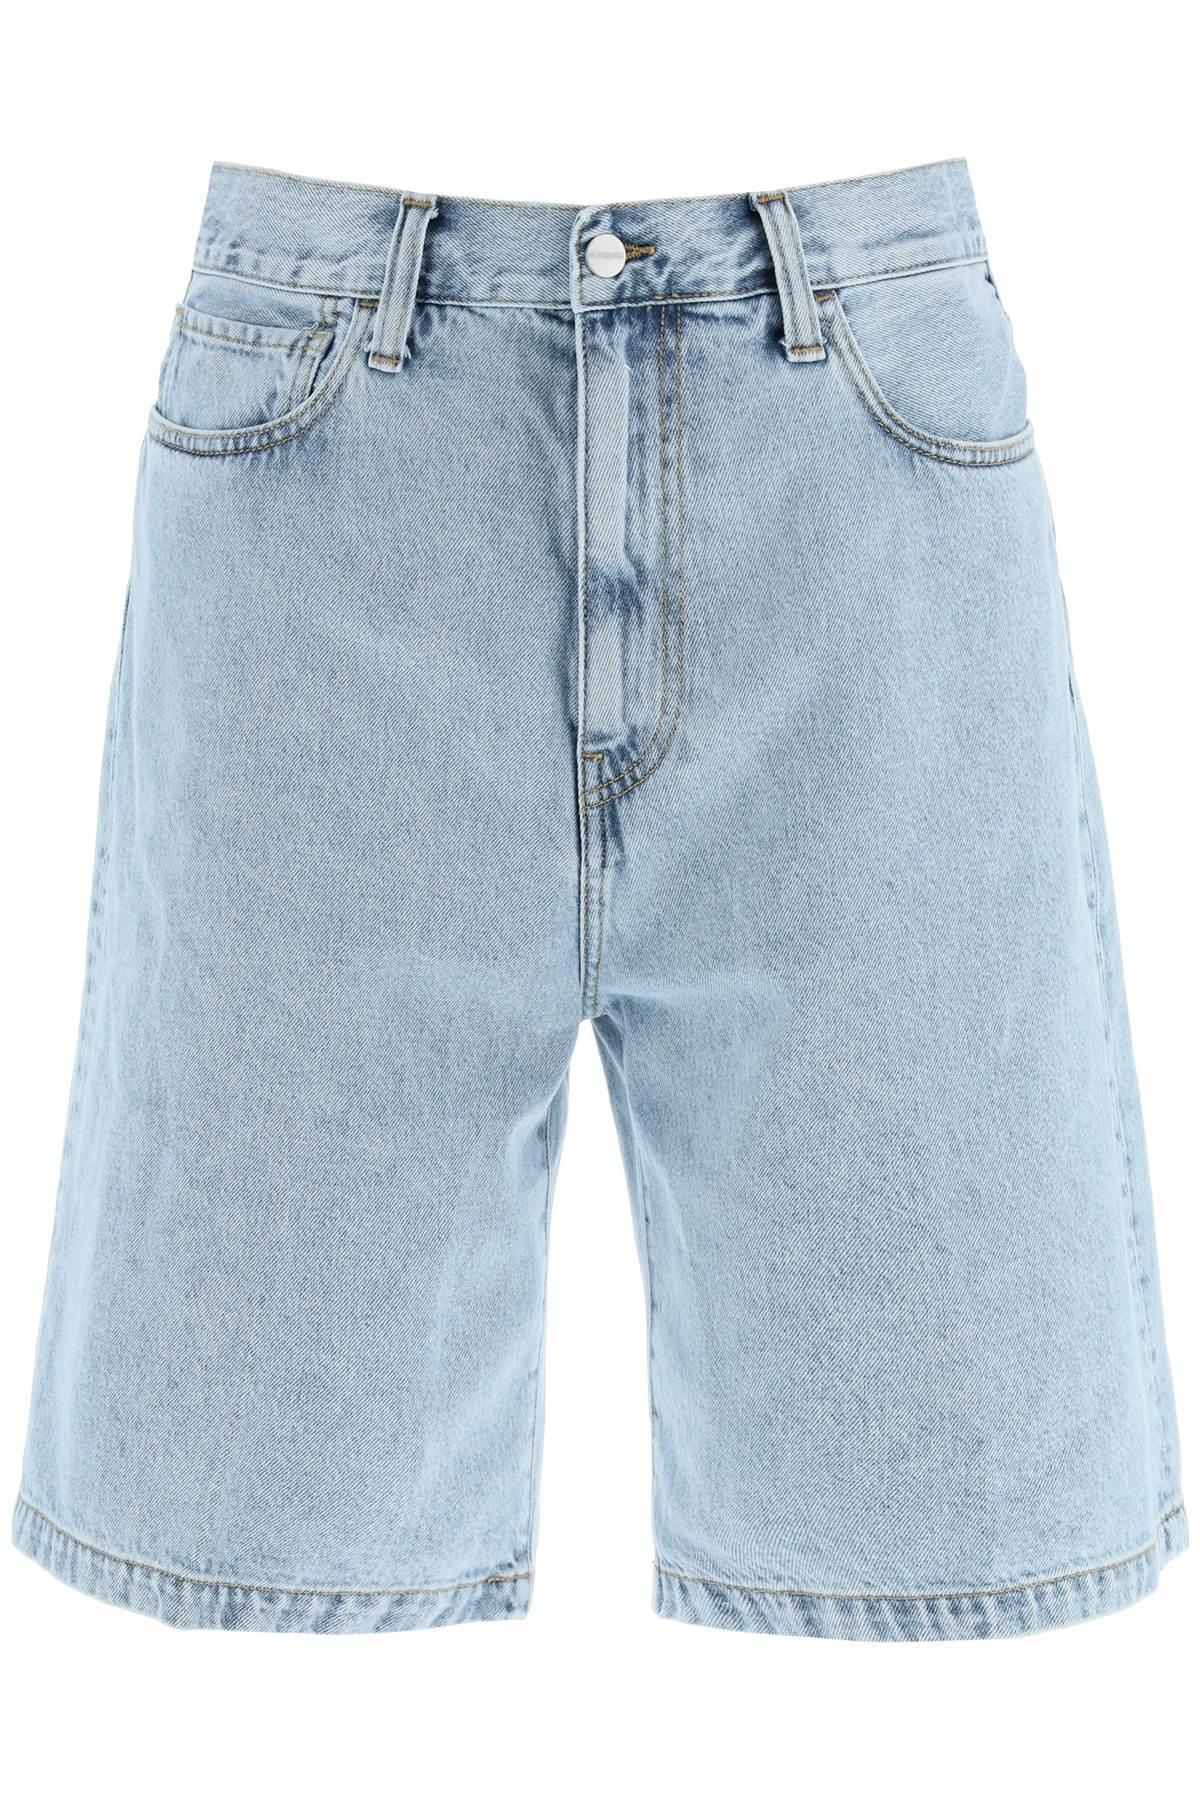 Carhartt WIP 'landon' Denim Shorts in Blue for Men | Lyst